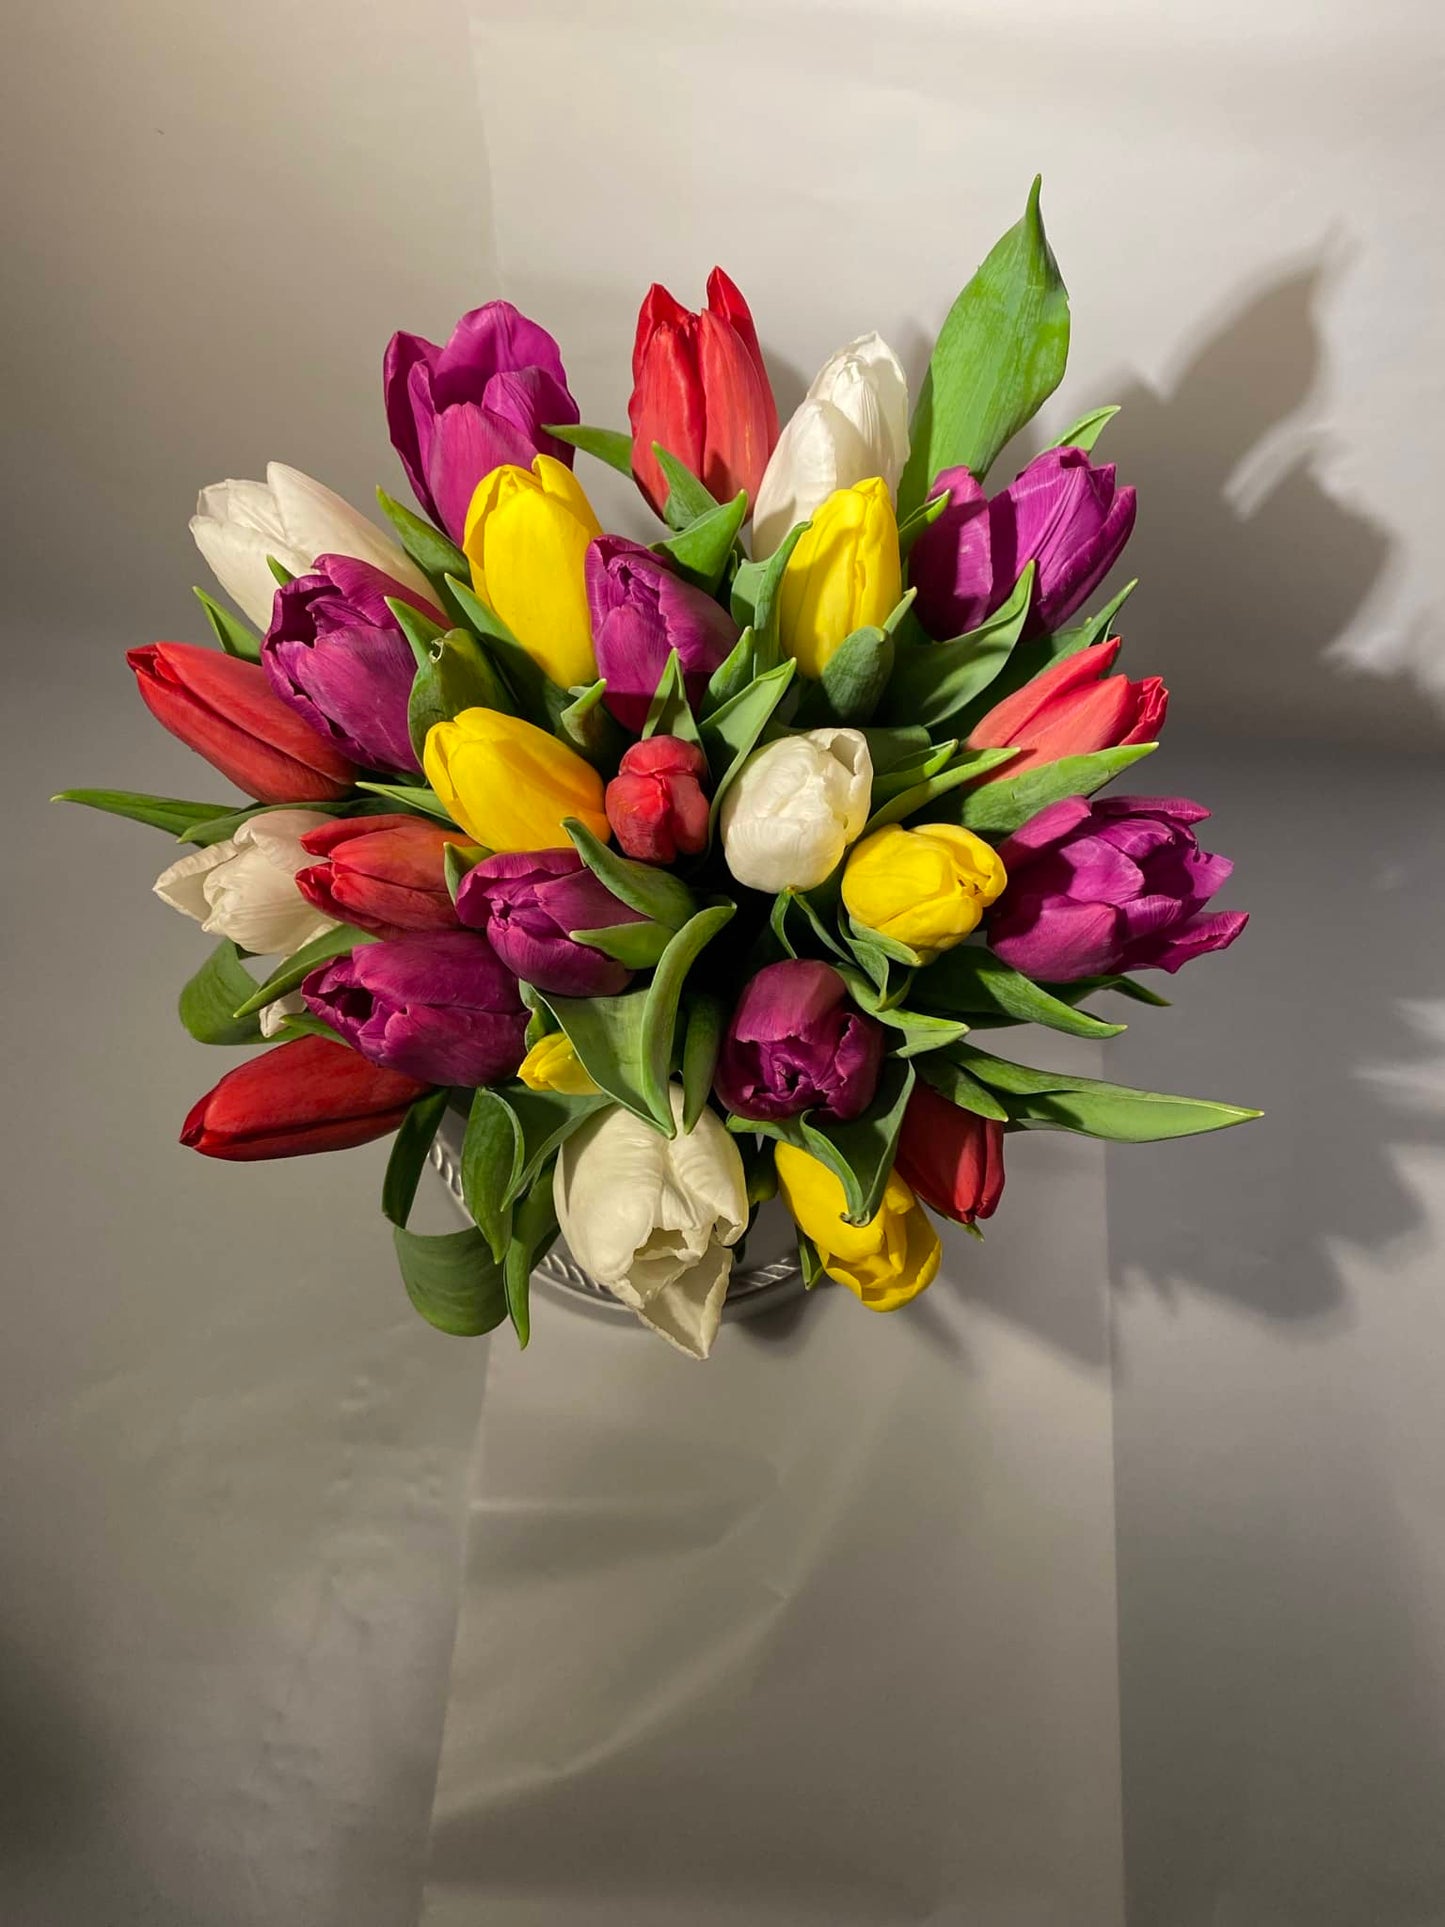 Krabička barevných Tulipánů